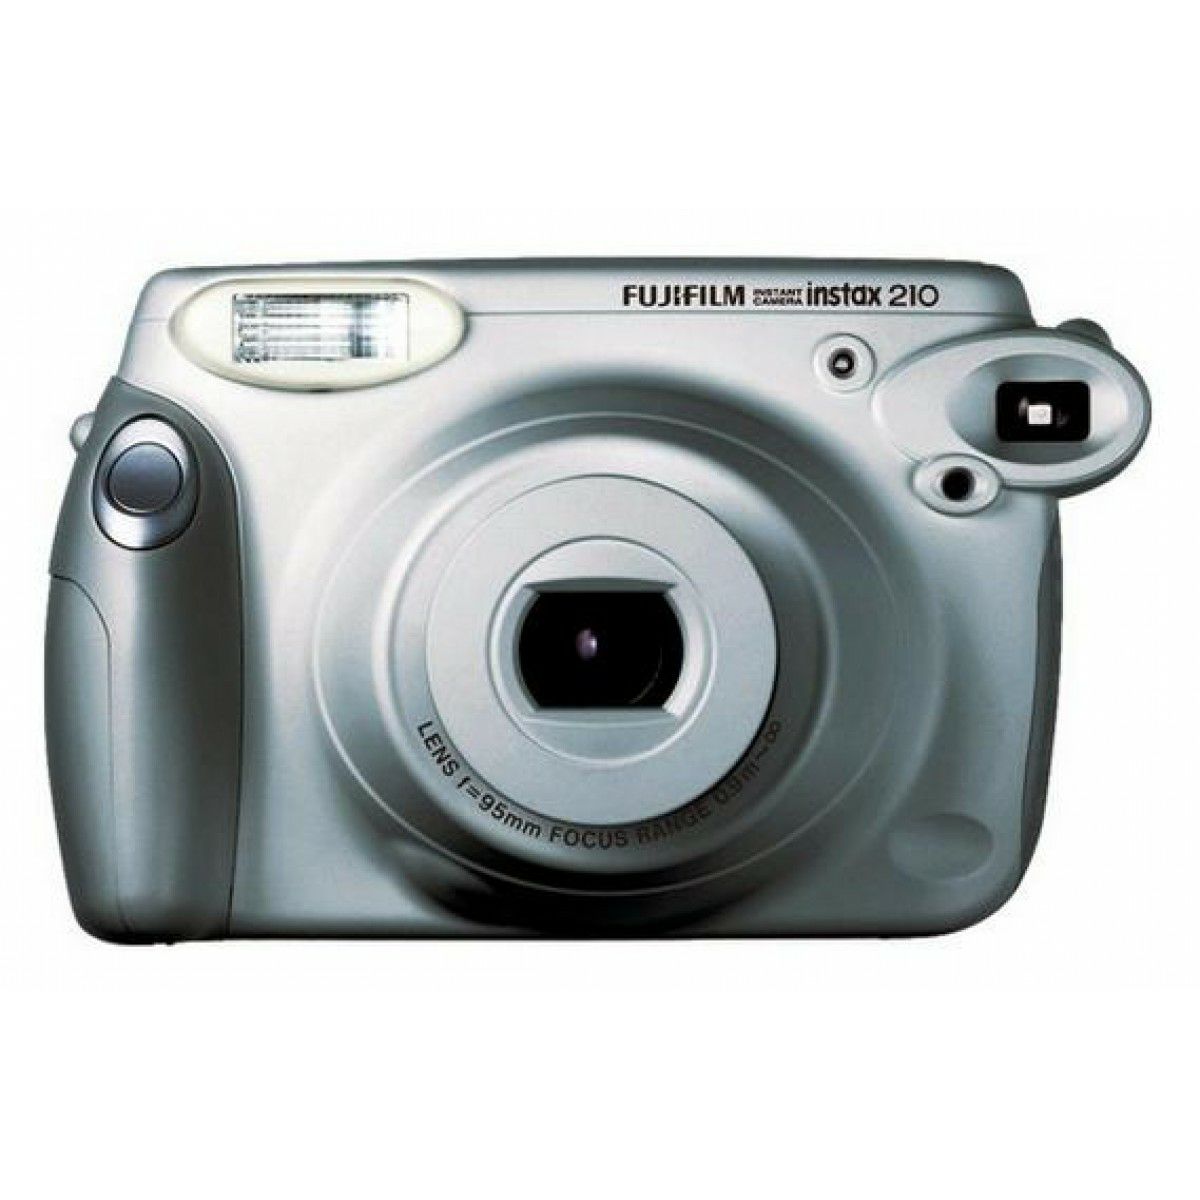 Fujifilm Instax 210 polaroid camera Silver Fuji srebreni instant fotoaparat